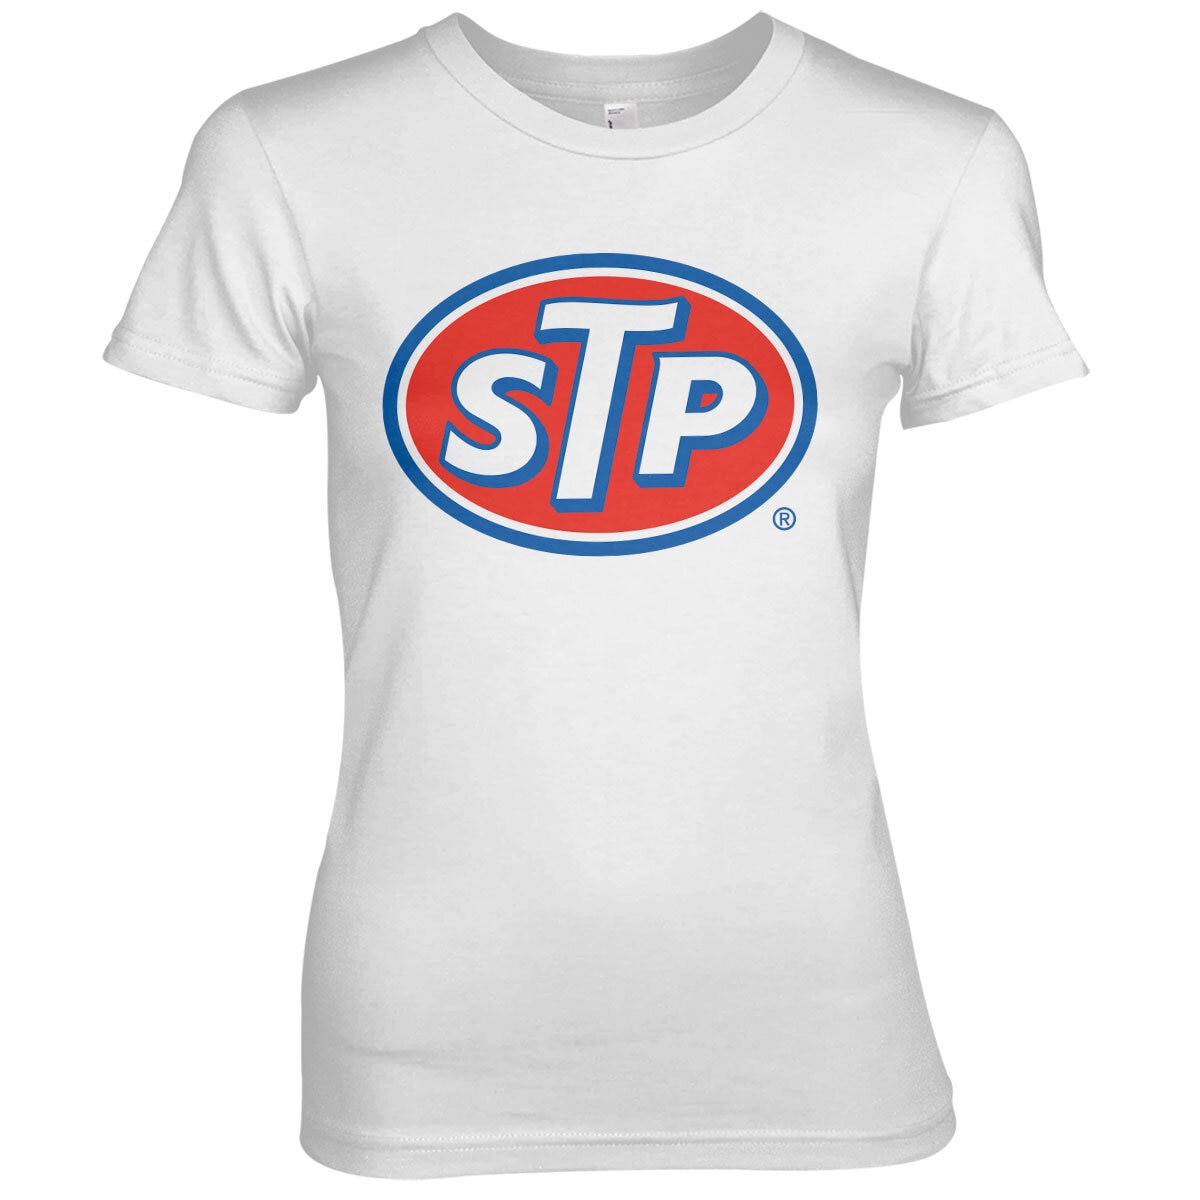 STP Classic Logo Girly Tee